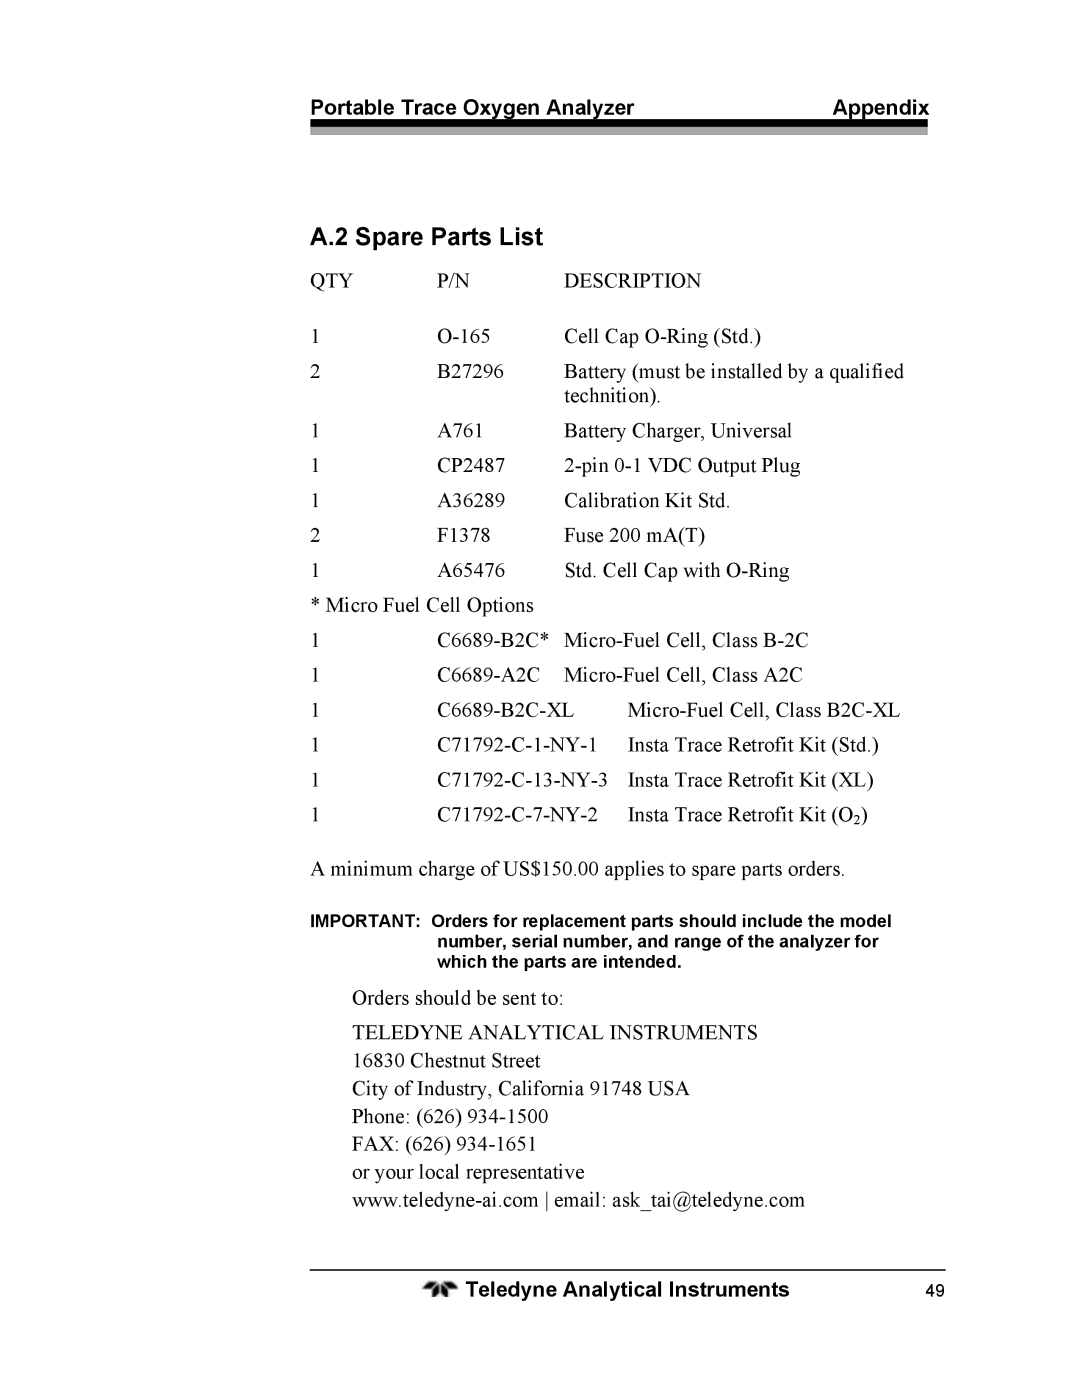 Teledyne 3110 operating instructions Spare Parts List, Portable Trace Oxygen Analyzer Appendix 